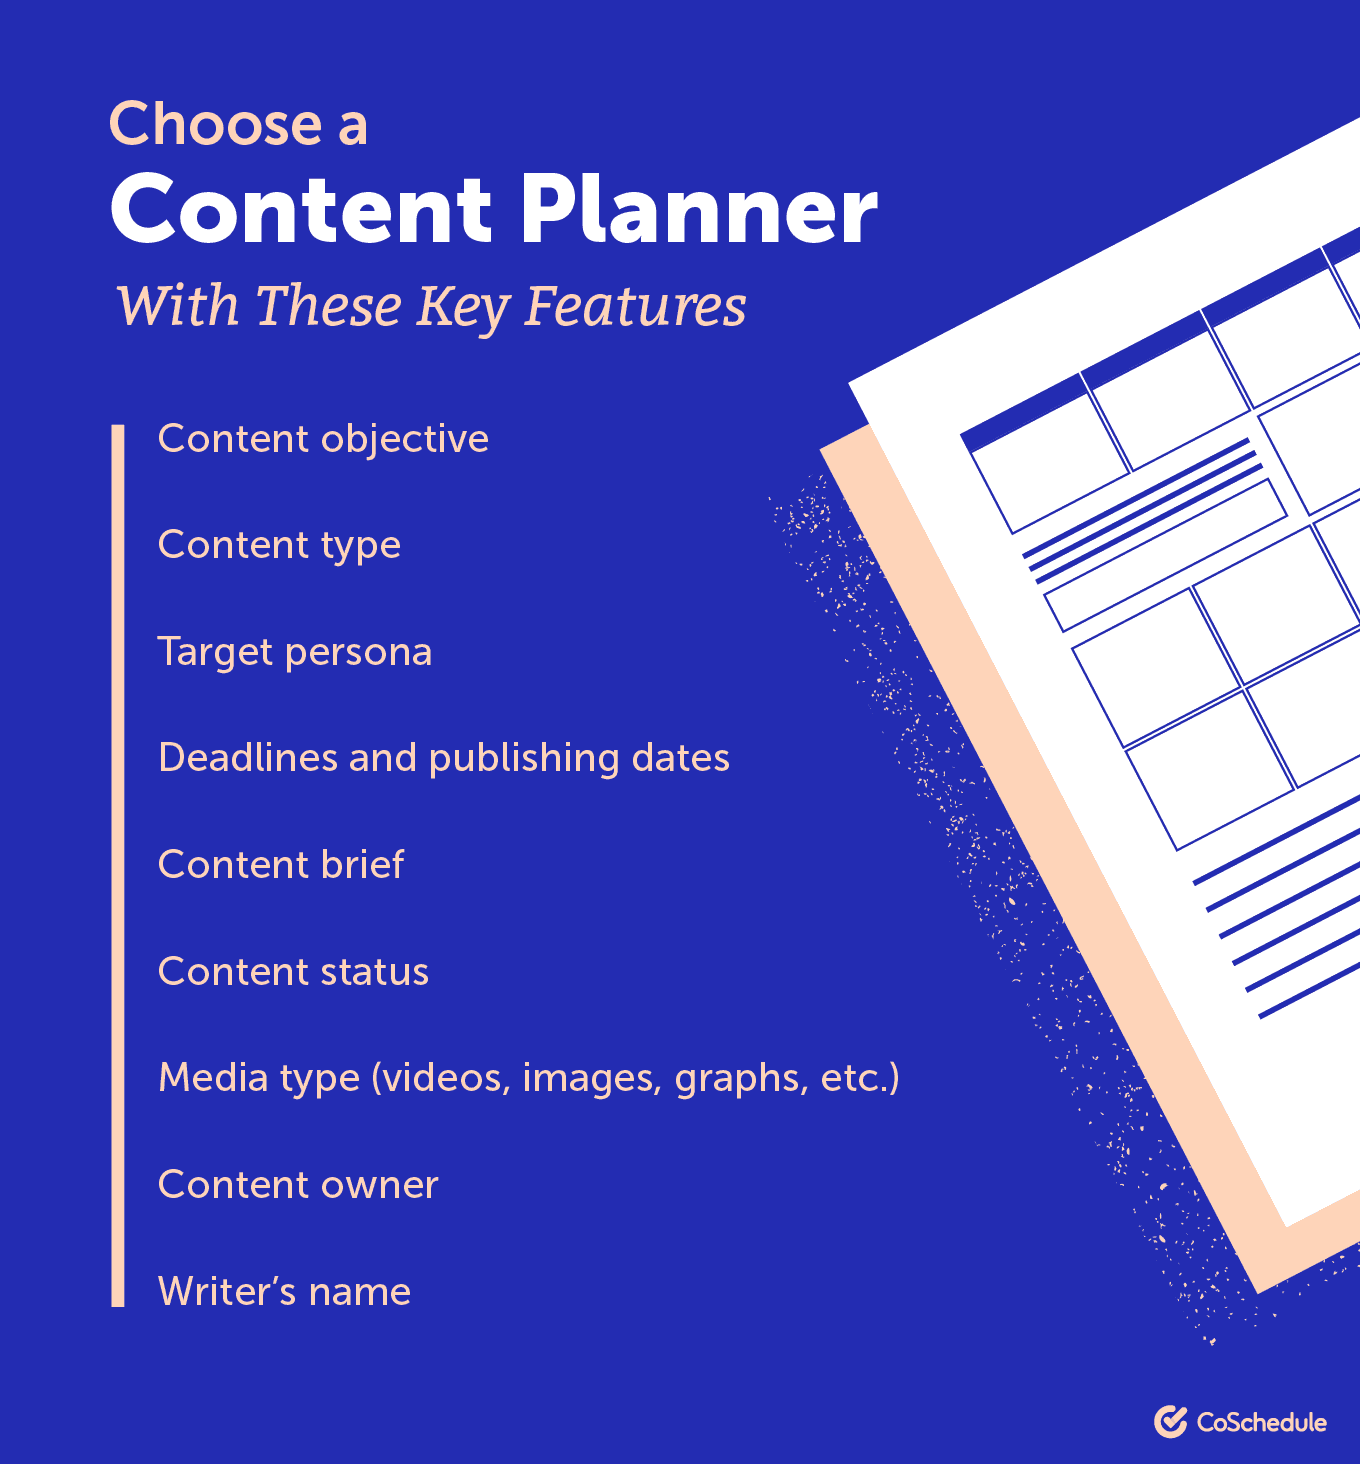 Choosing a content planner